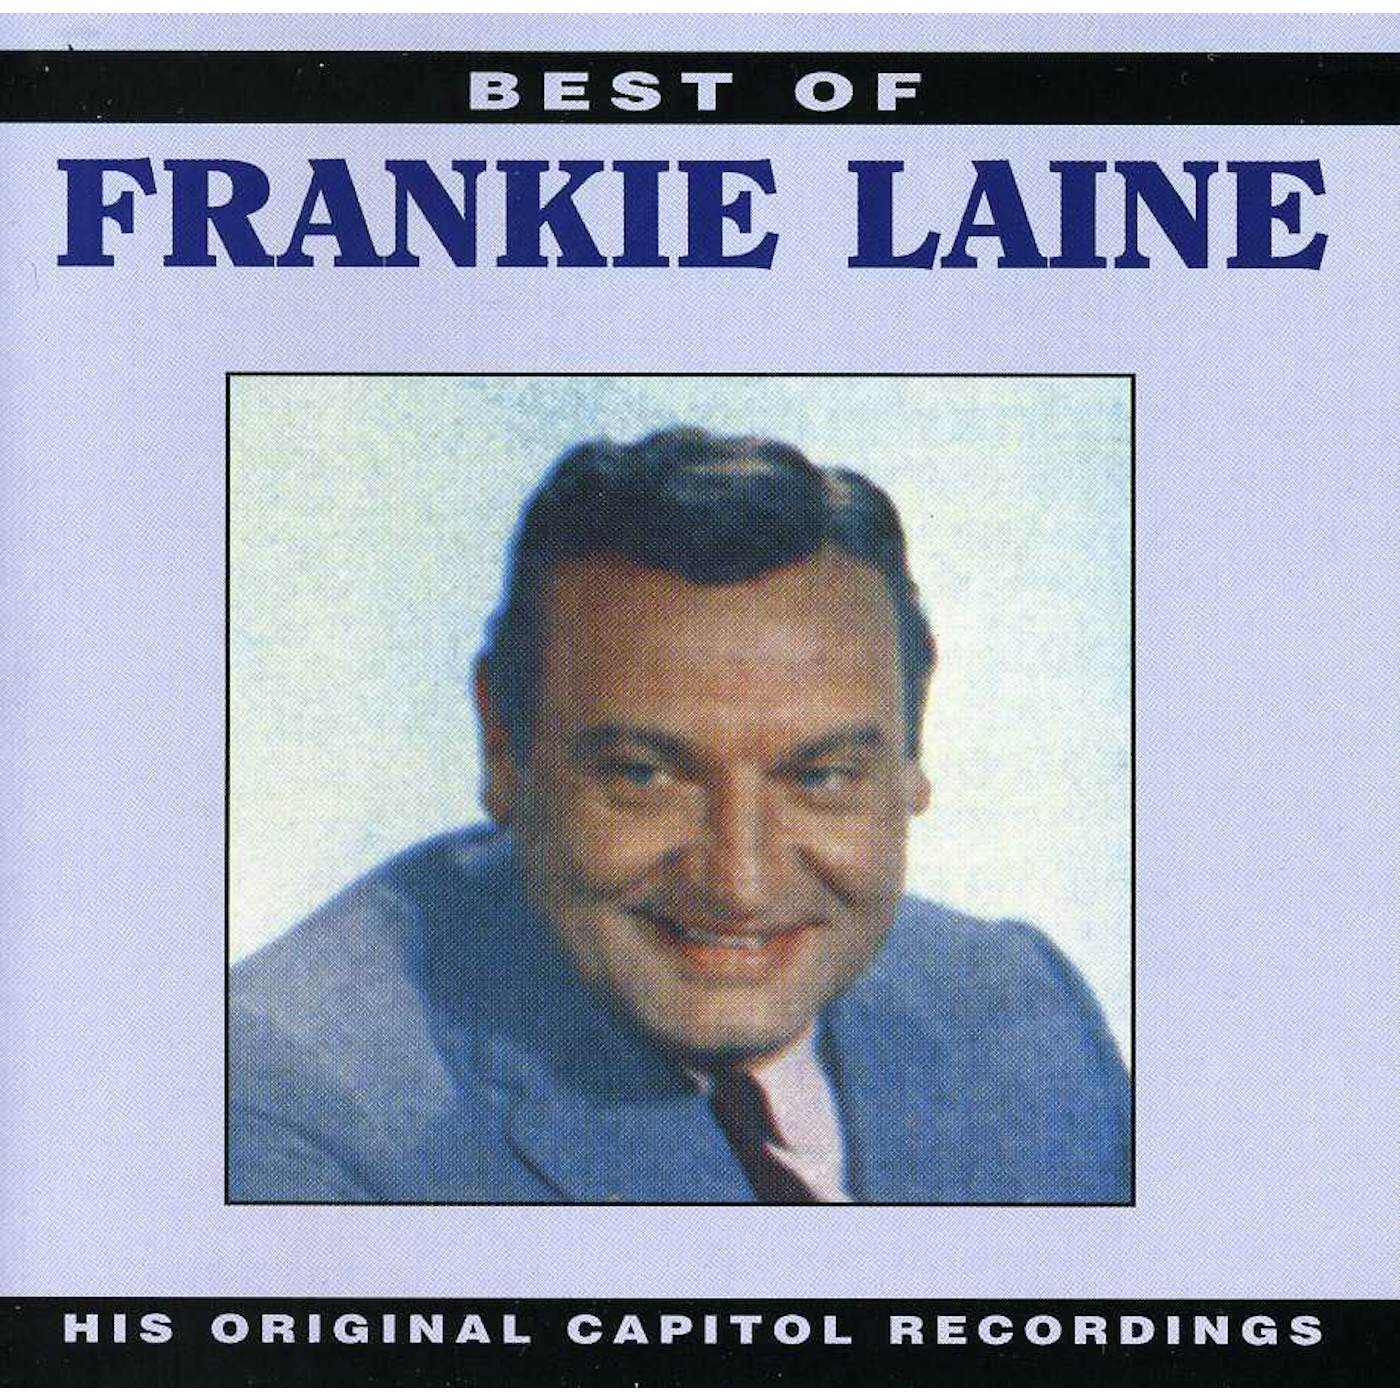 Frankie Laine BEST OF CD